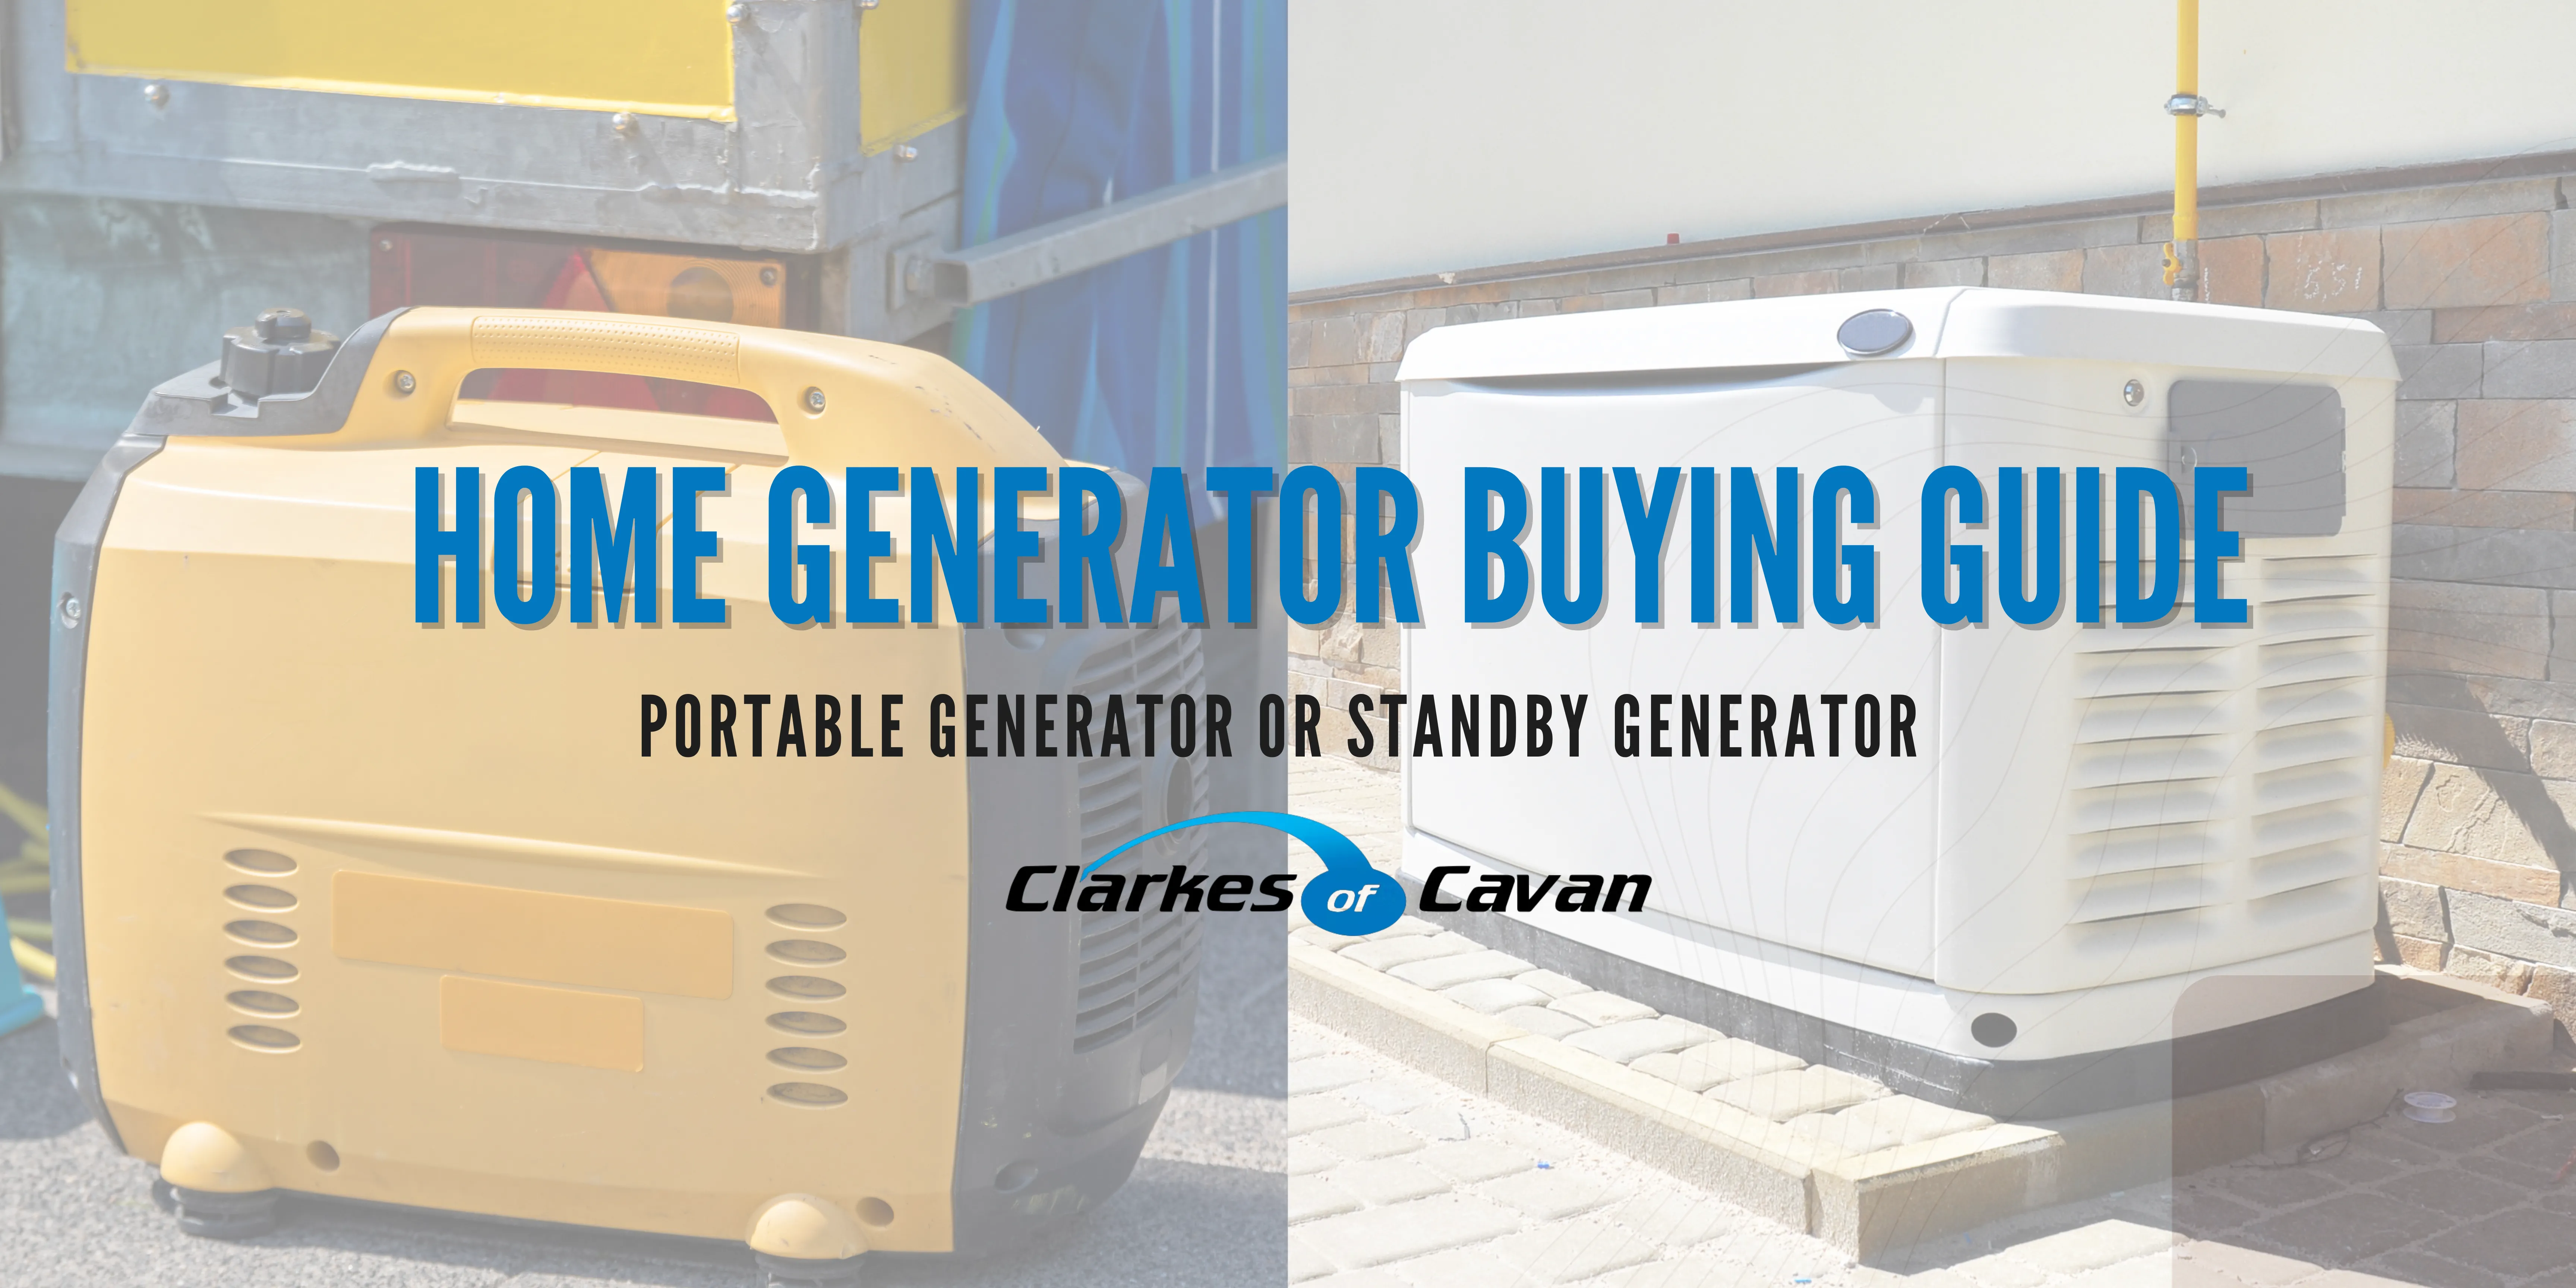 Home Generator Buying Guide: Portable Generator or Standby Generator? 